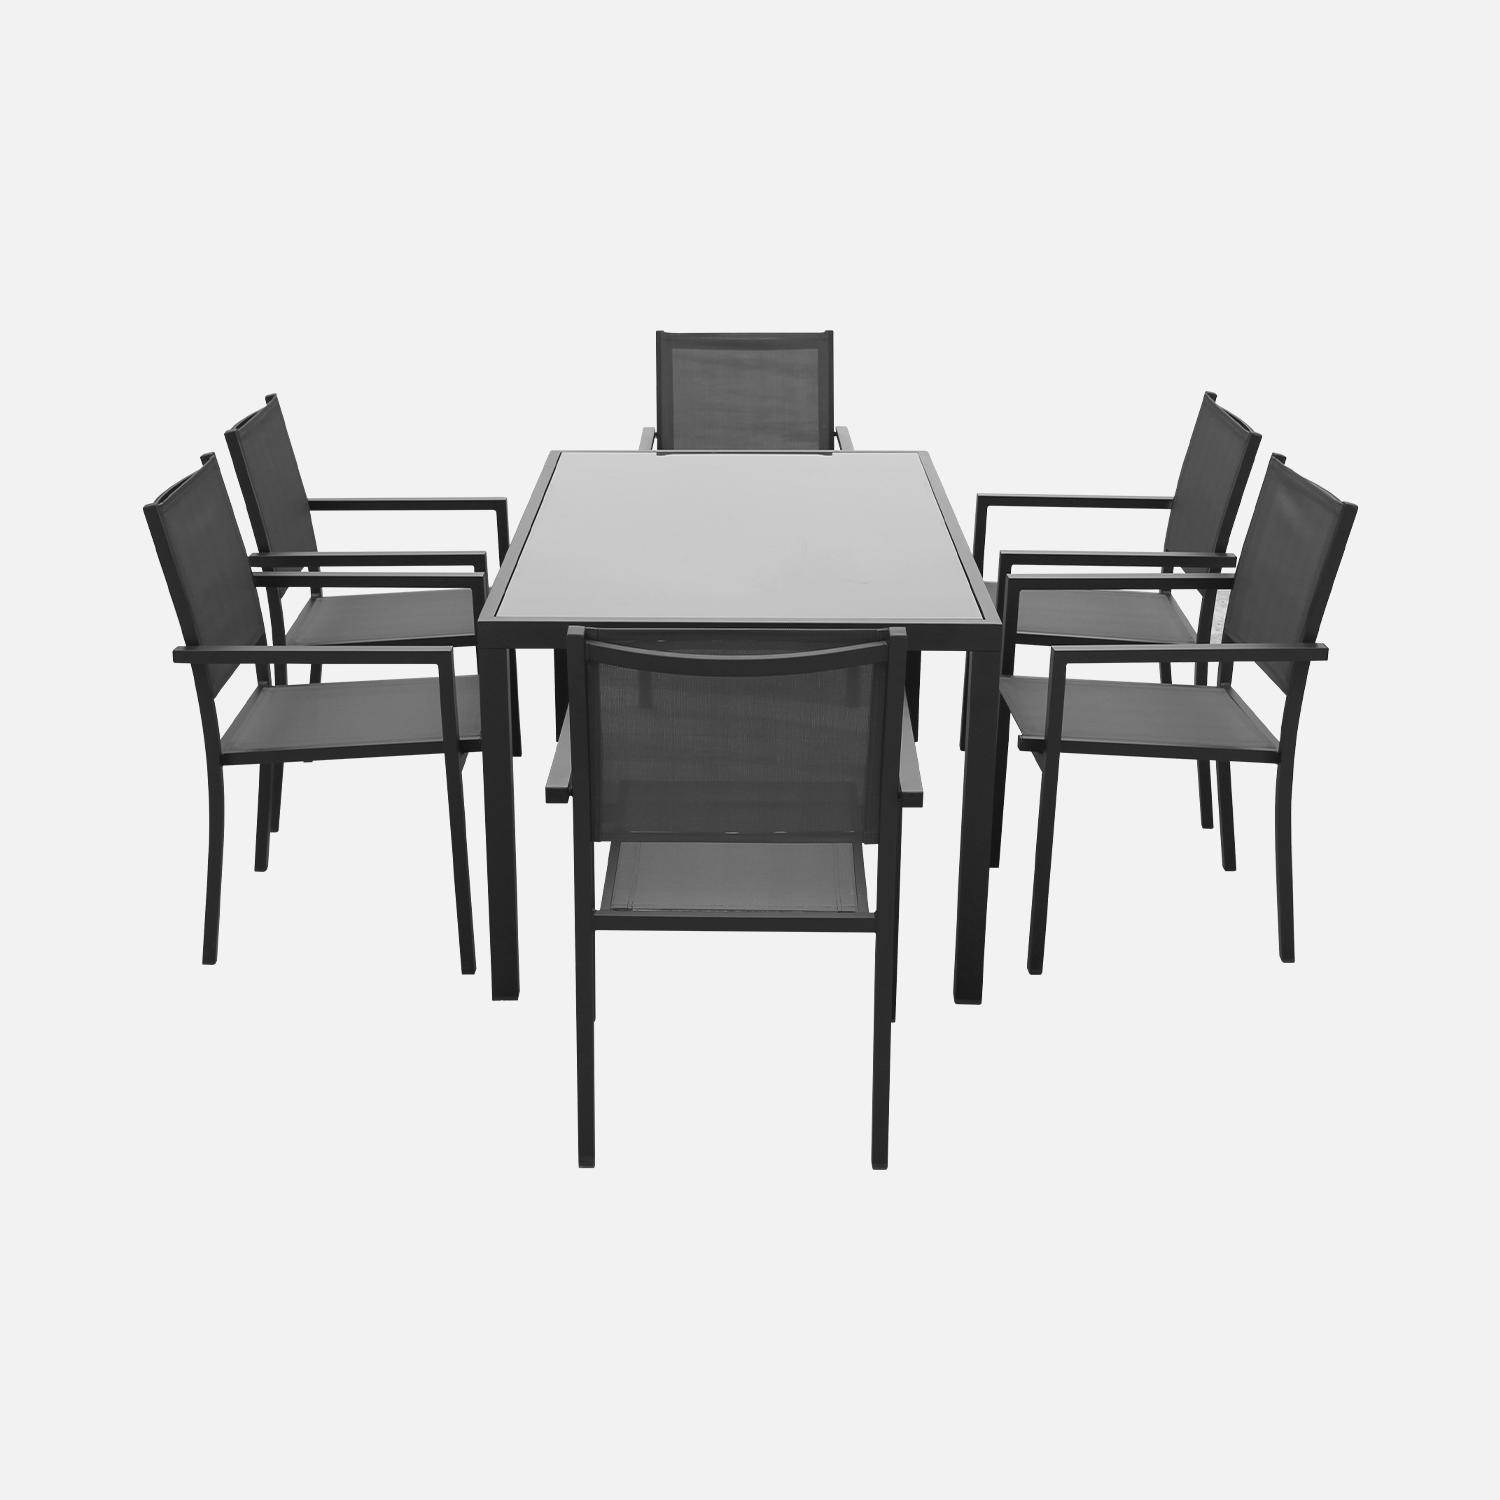 Gartengarnitur aus Aluminium und Textilene - Capua 180 cm - Anthrazit, grau - 8 Plätze - 1 großer rechteckiger Tisch, 8 stapelbare Sessel Photo4